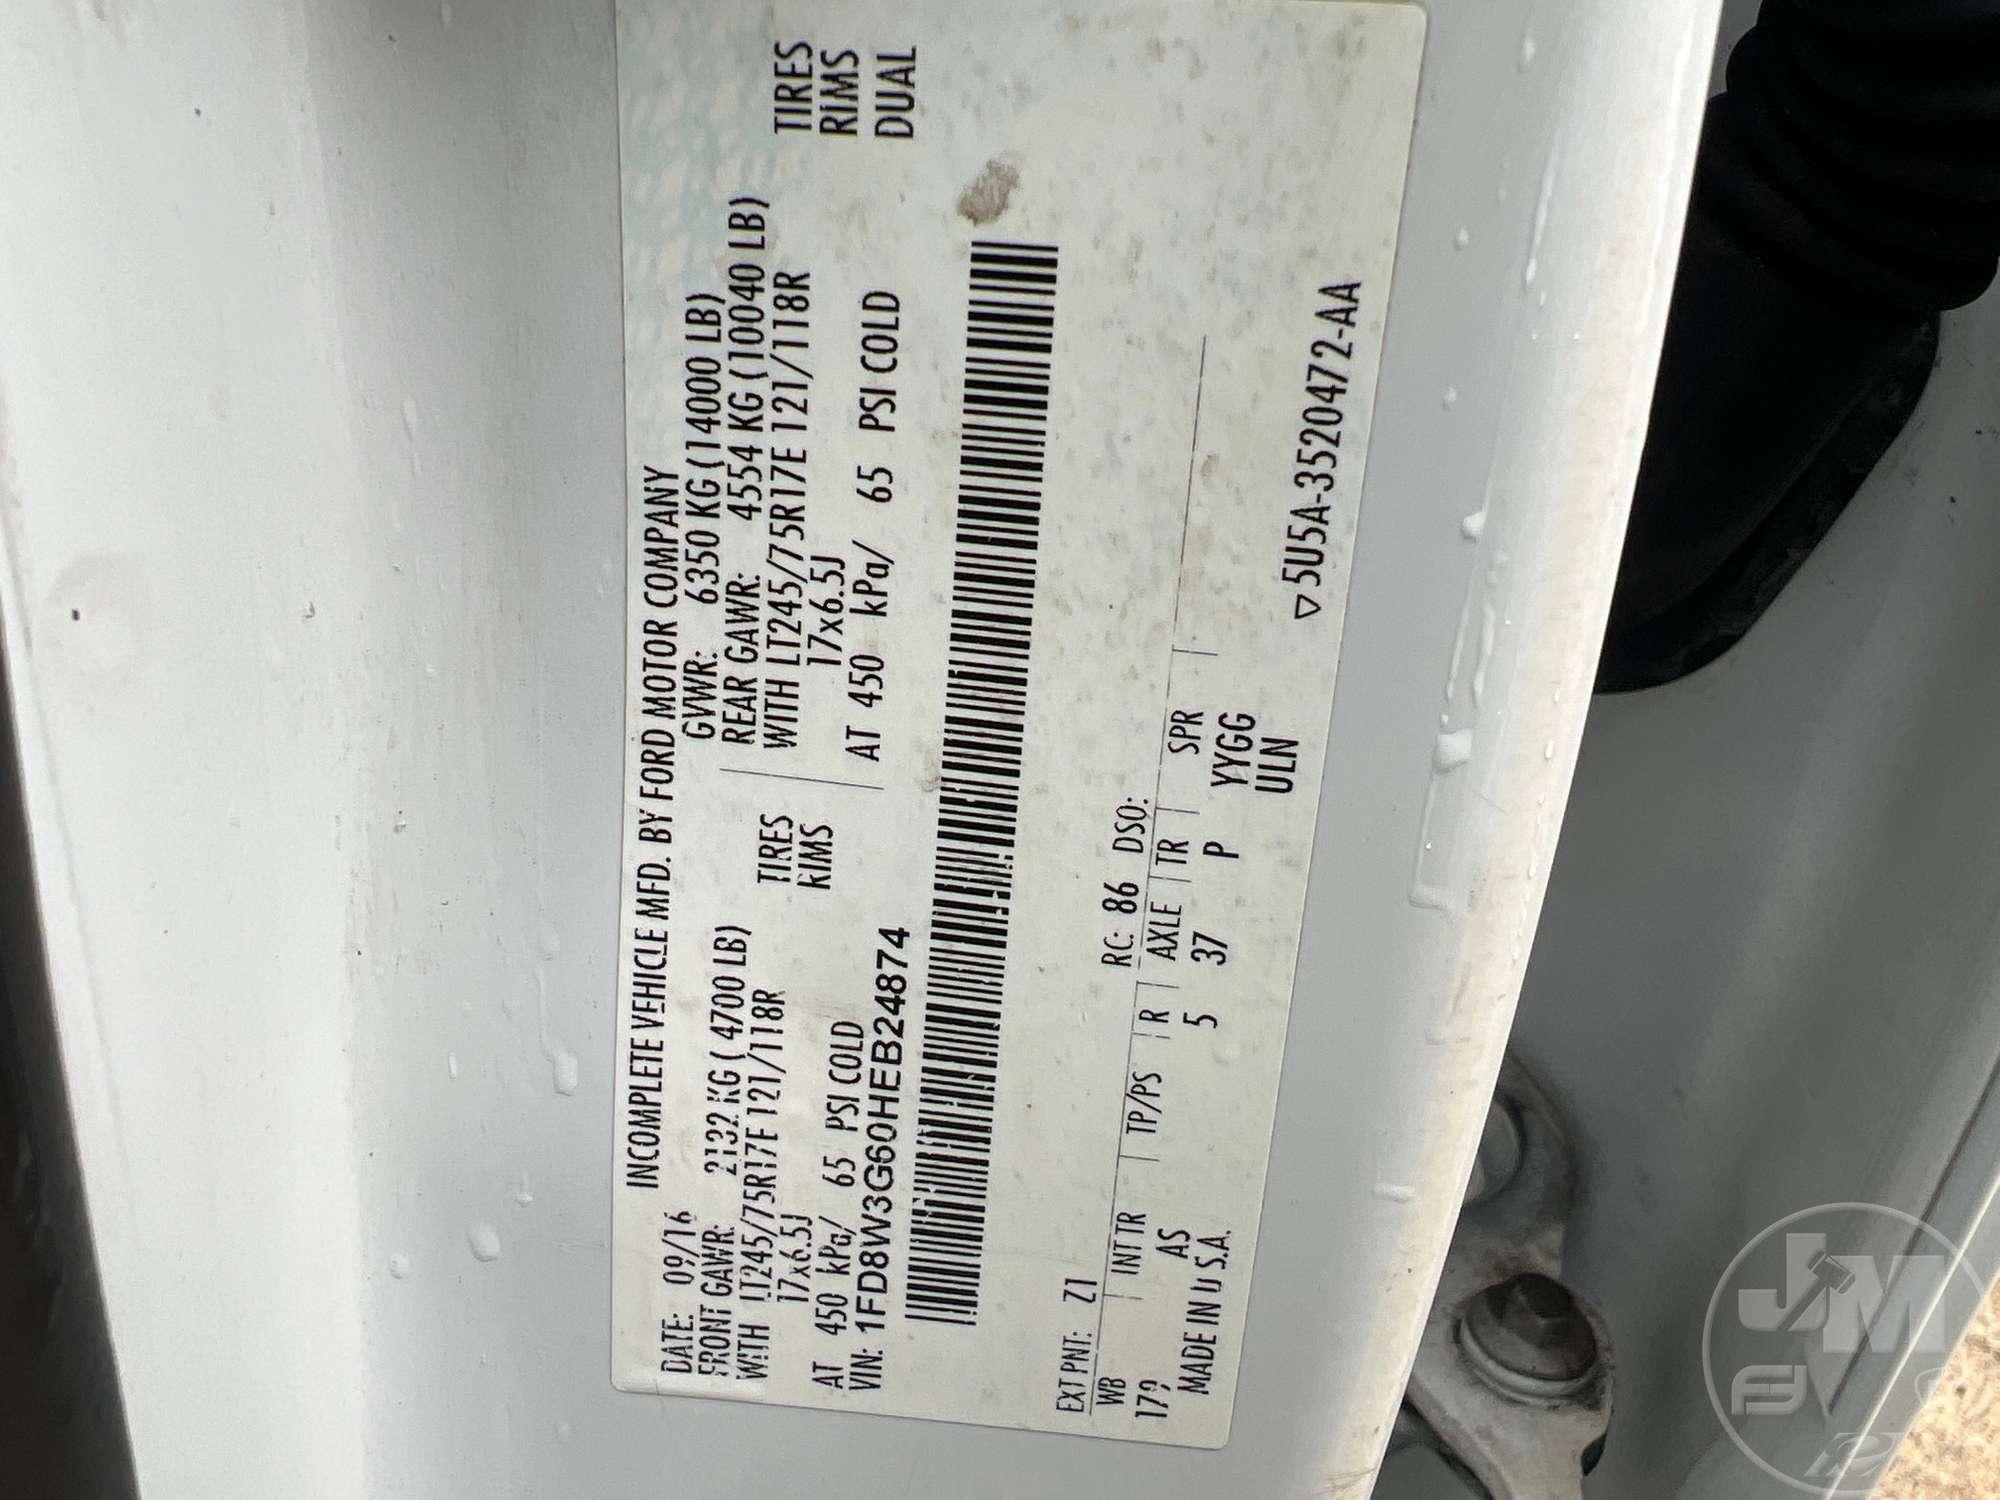 2017 FORD F-350 XL SINGLE AXLE CREW CAB FLATBED TRUCK VIN: 1FD8W3G60HEB24874